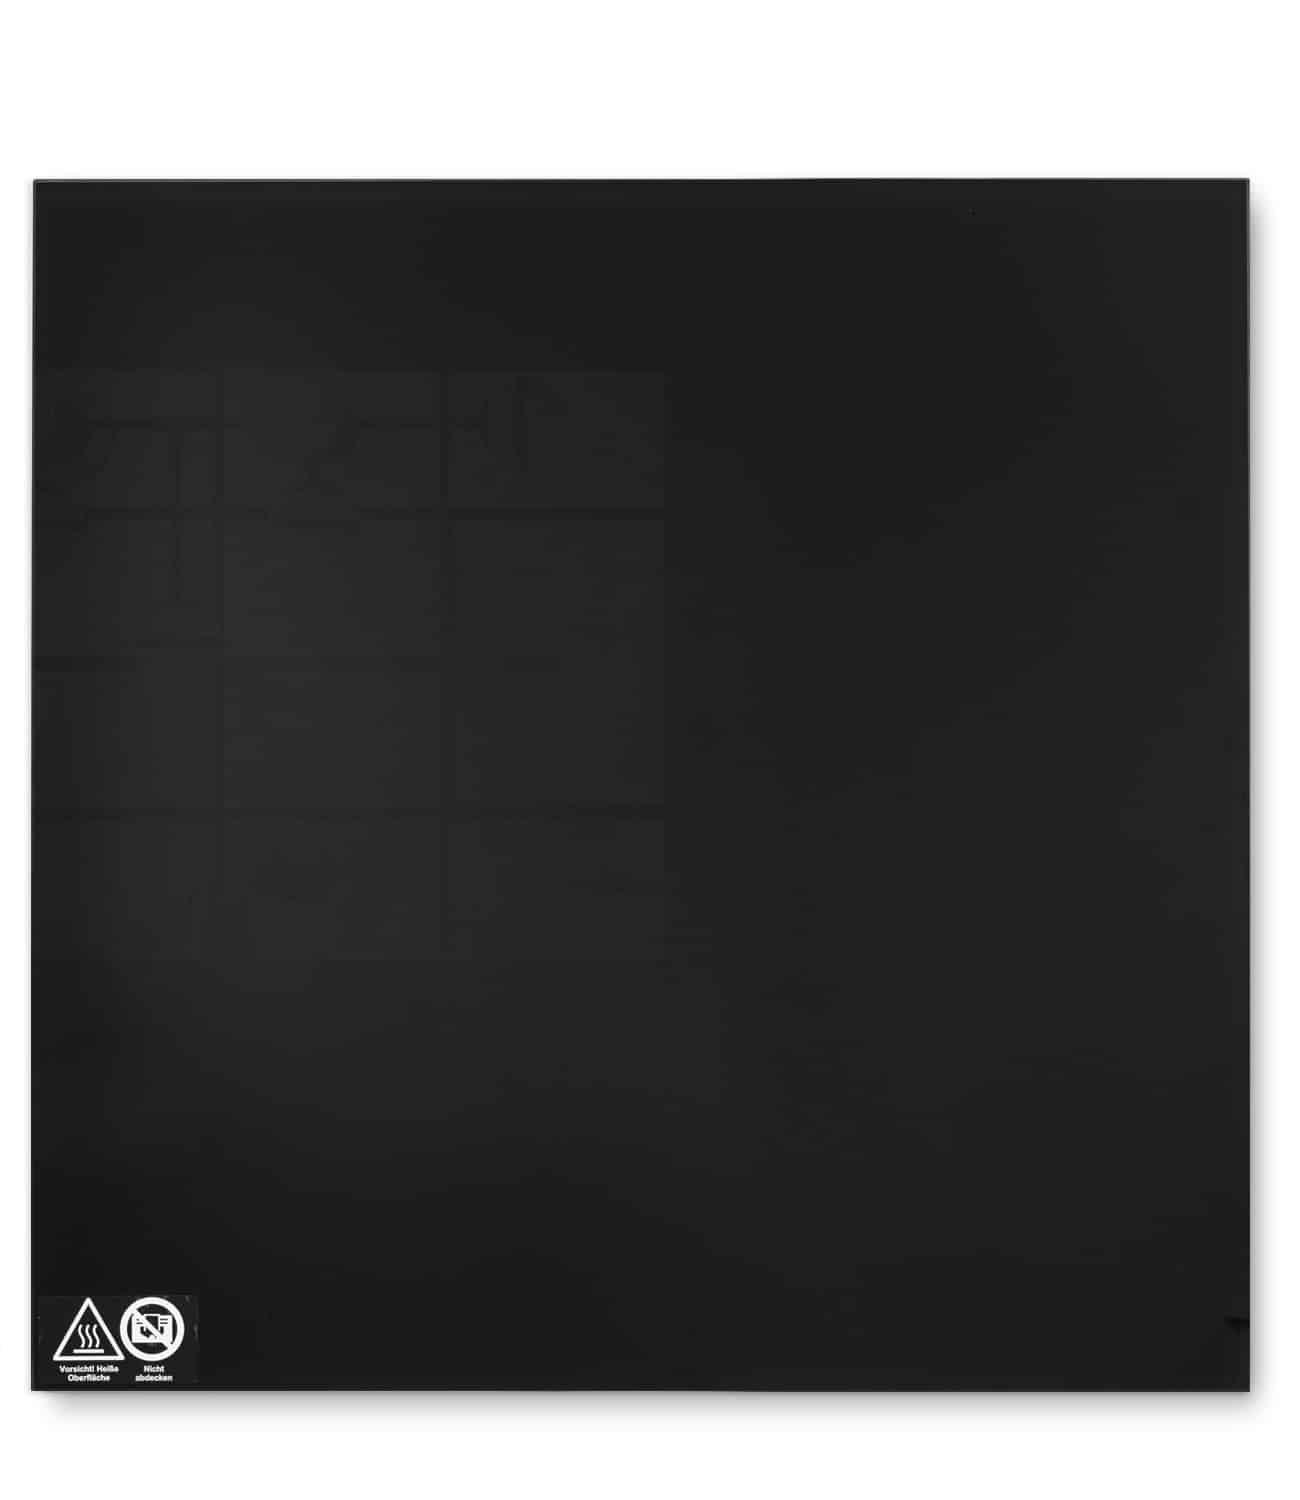 OPRANIC P7 Glazen Infrarood verwarming 450W – 900W in wit of zwart